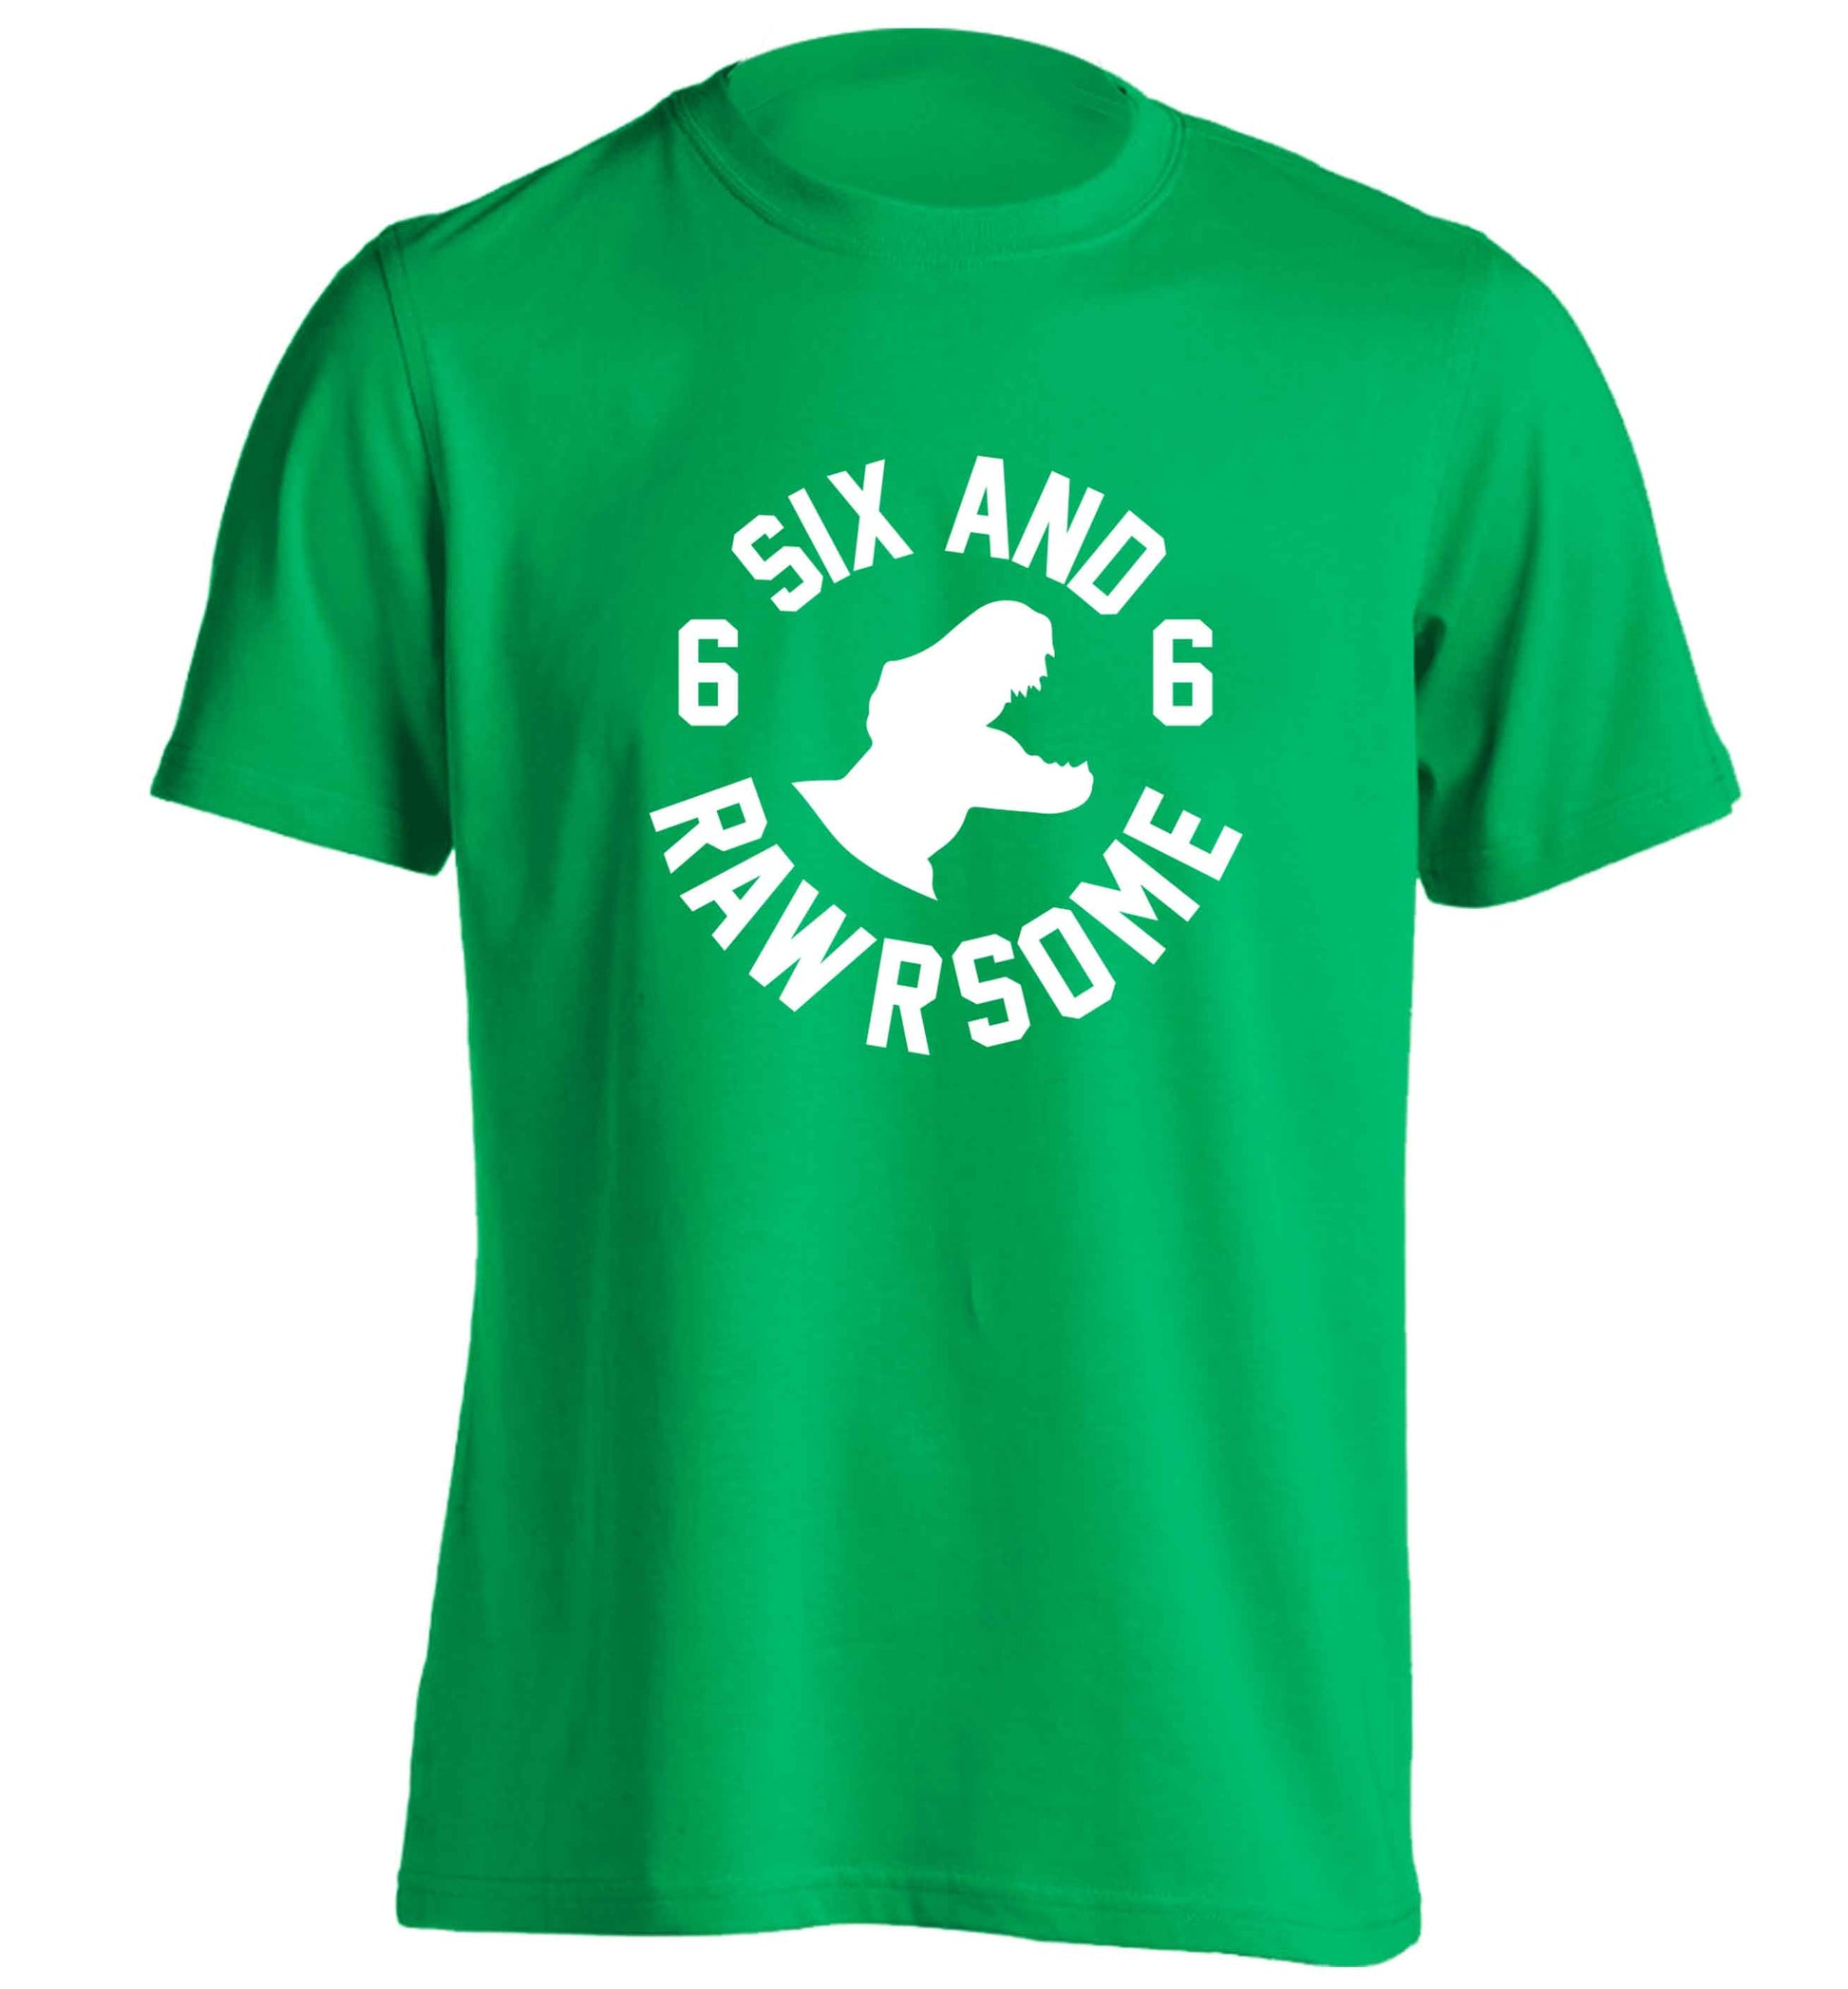 Six and rawrsome adults unisex green Tshirt 2XL